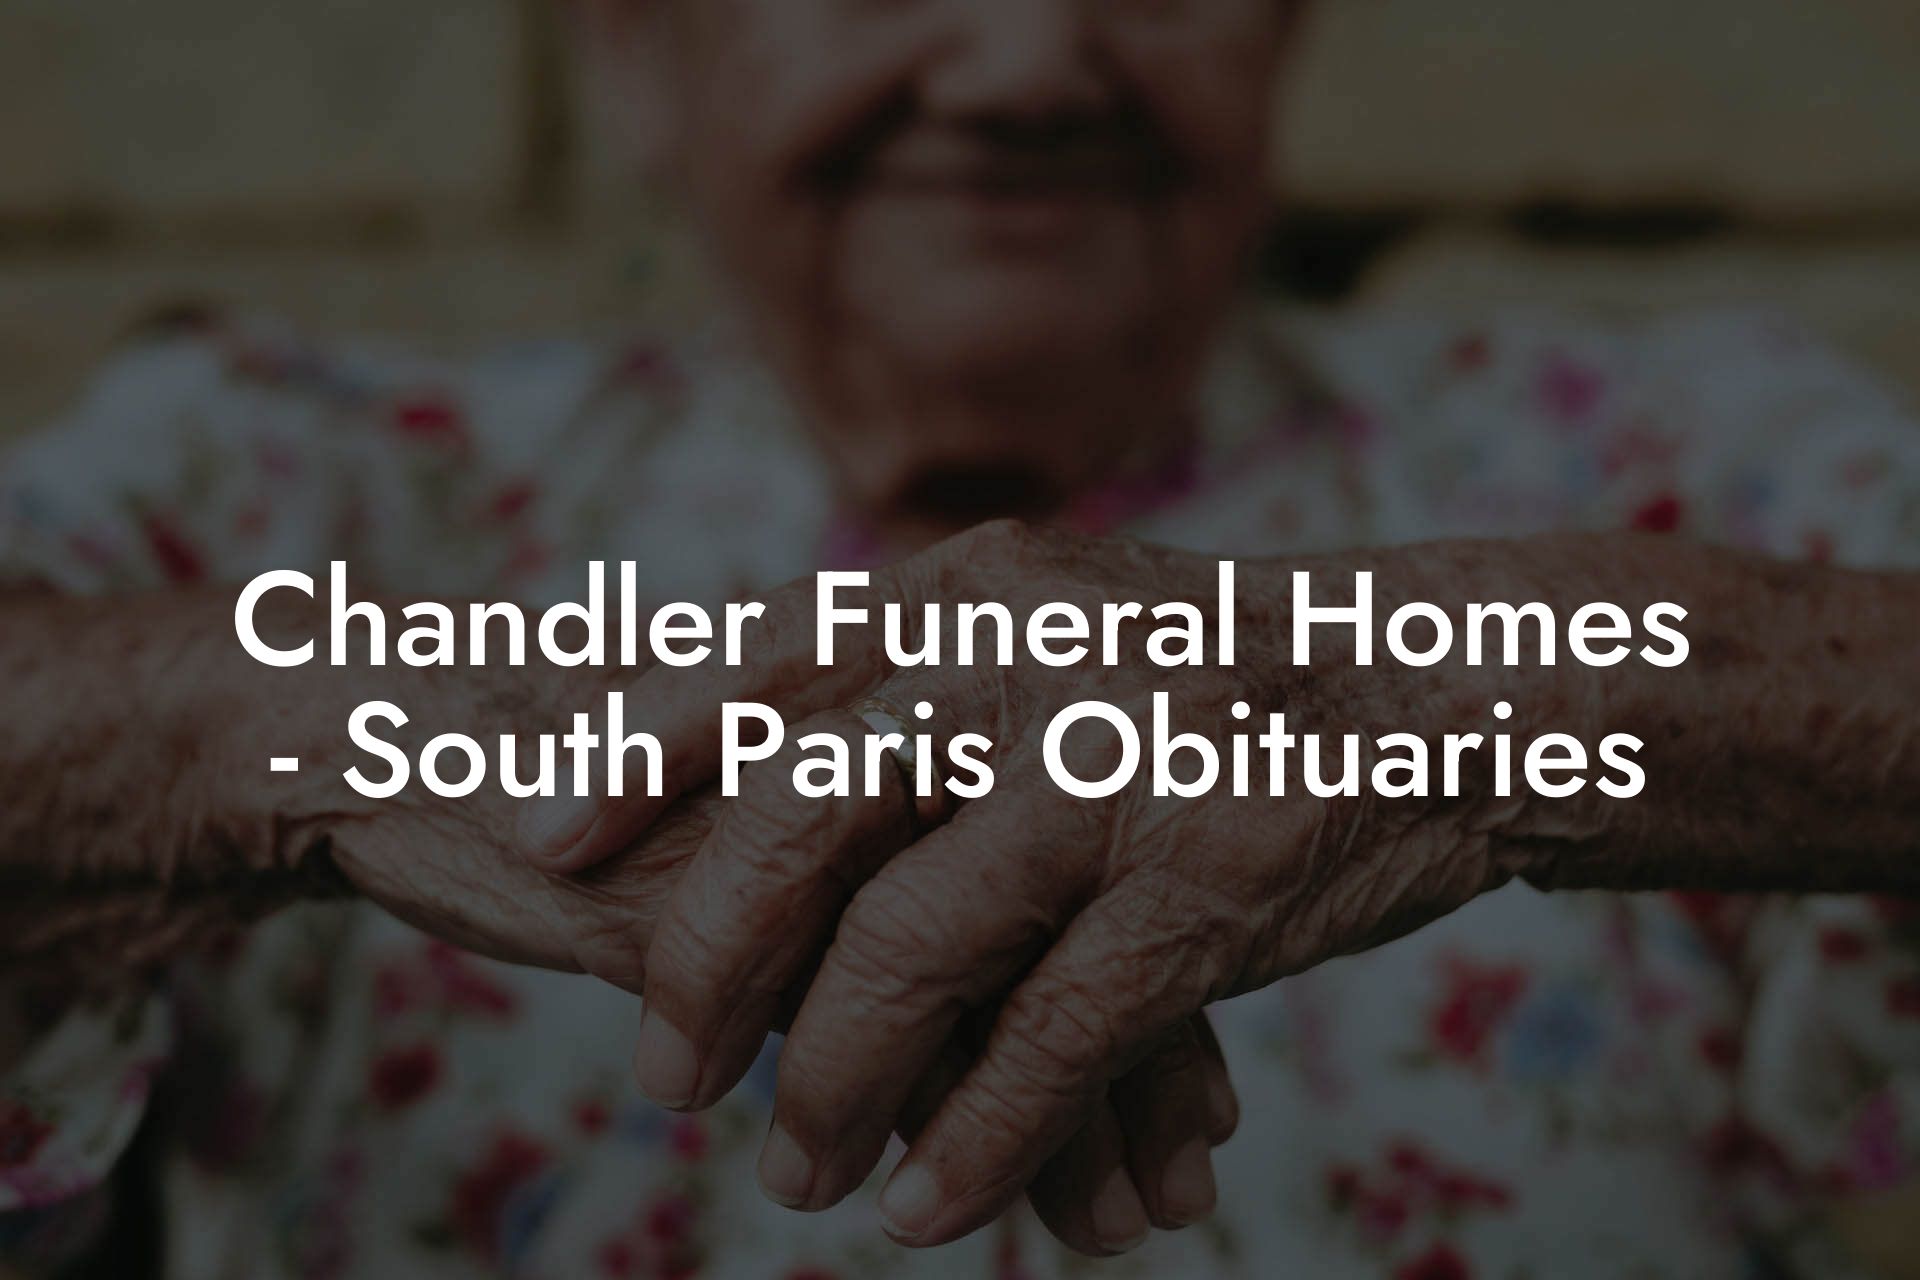 Chandler Funeral Homes - South Paris Obituaries